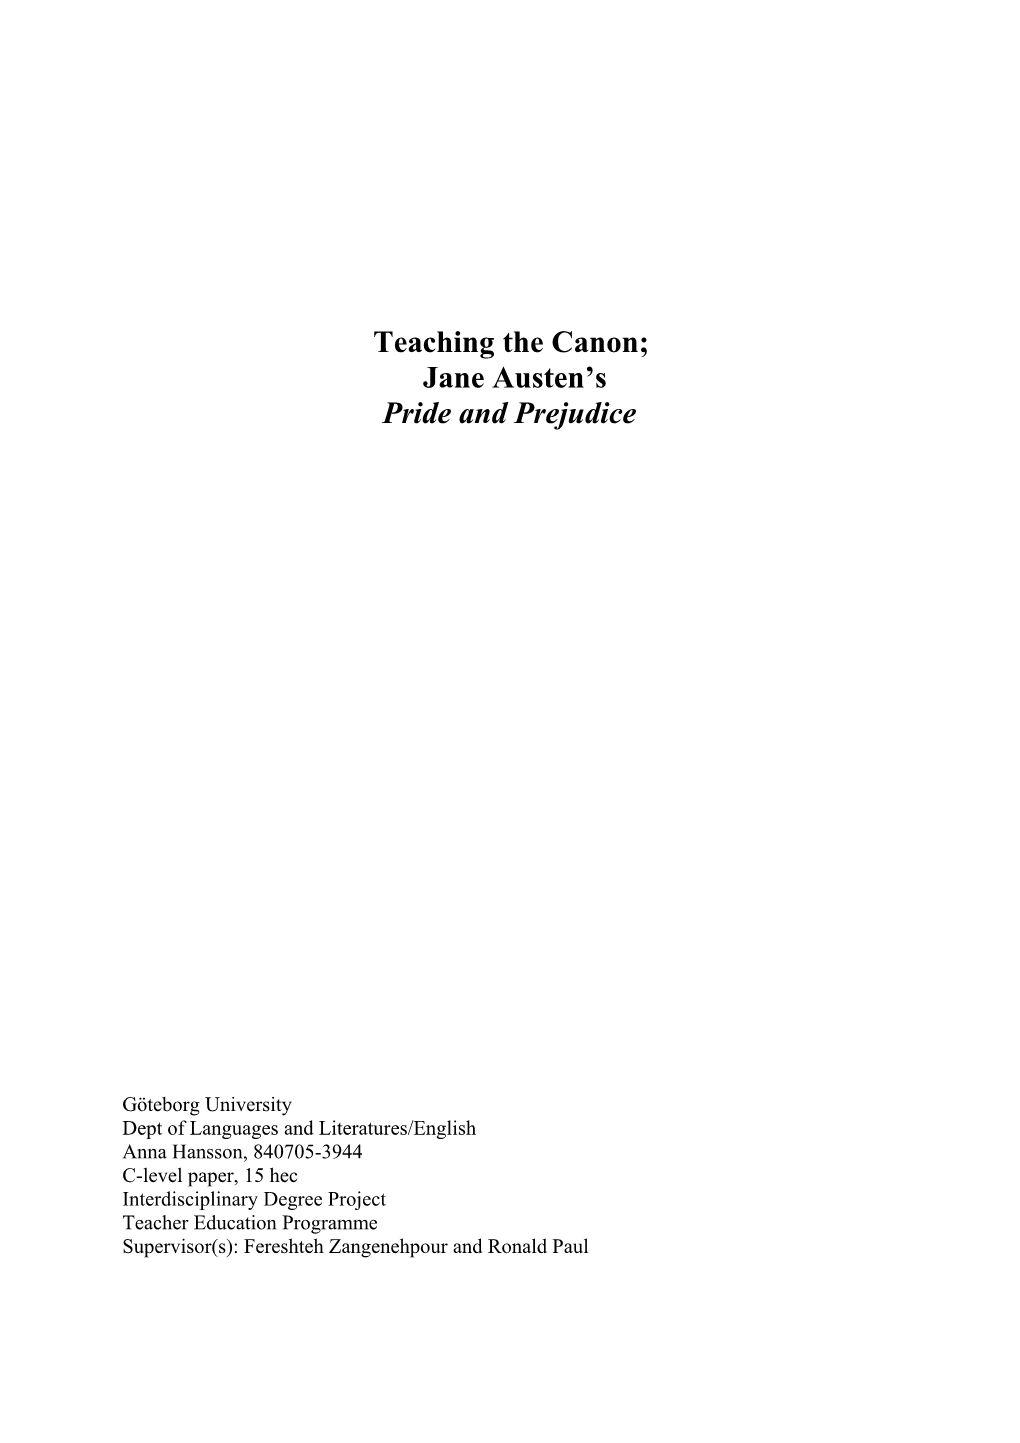 Title of the Interdisciplinary Paper